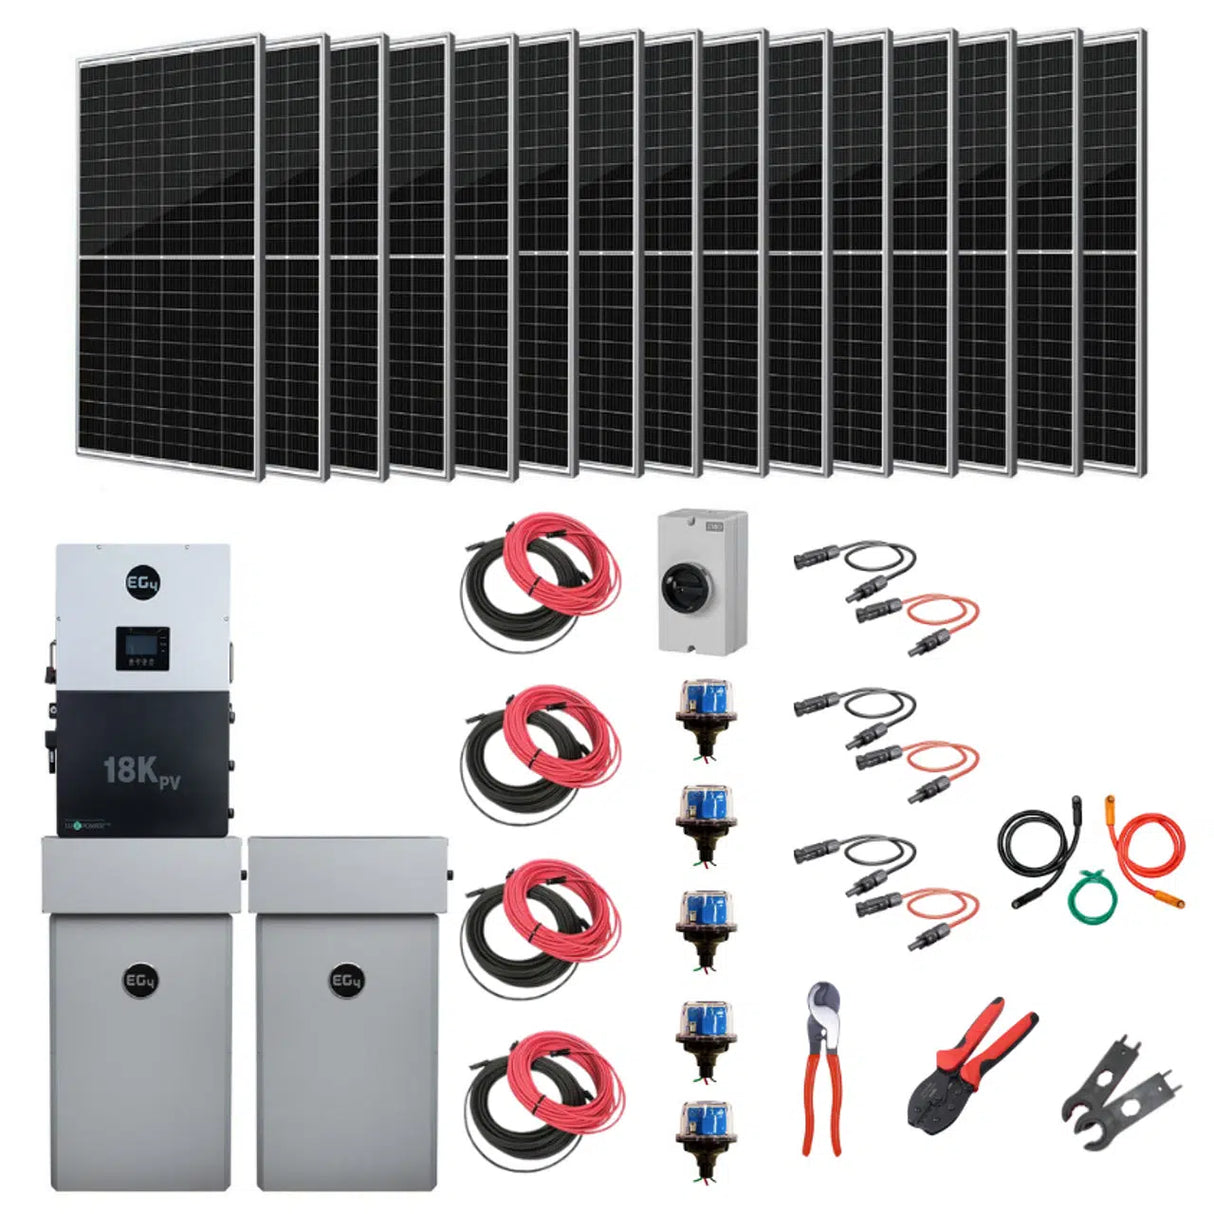 EG4 | Complete Hybrid Solar Kit - EG4 PowerPro ESS | 12 kW AC Output | Up To 45 kWh Battery Backup [Kit-E0007]